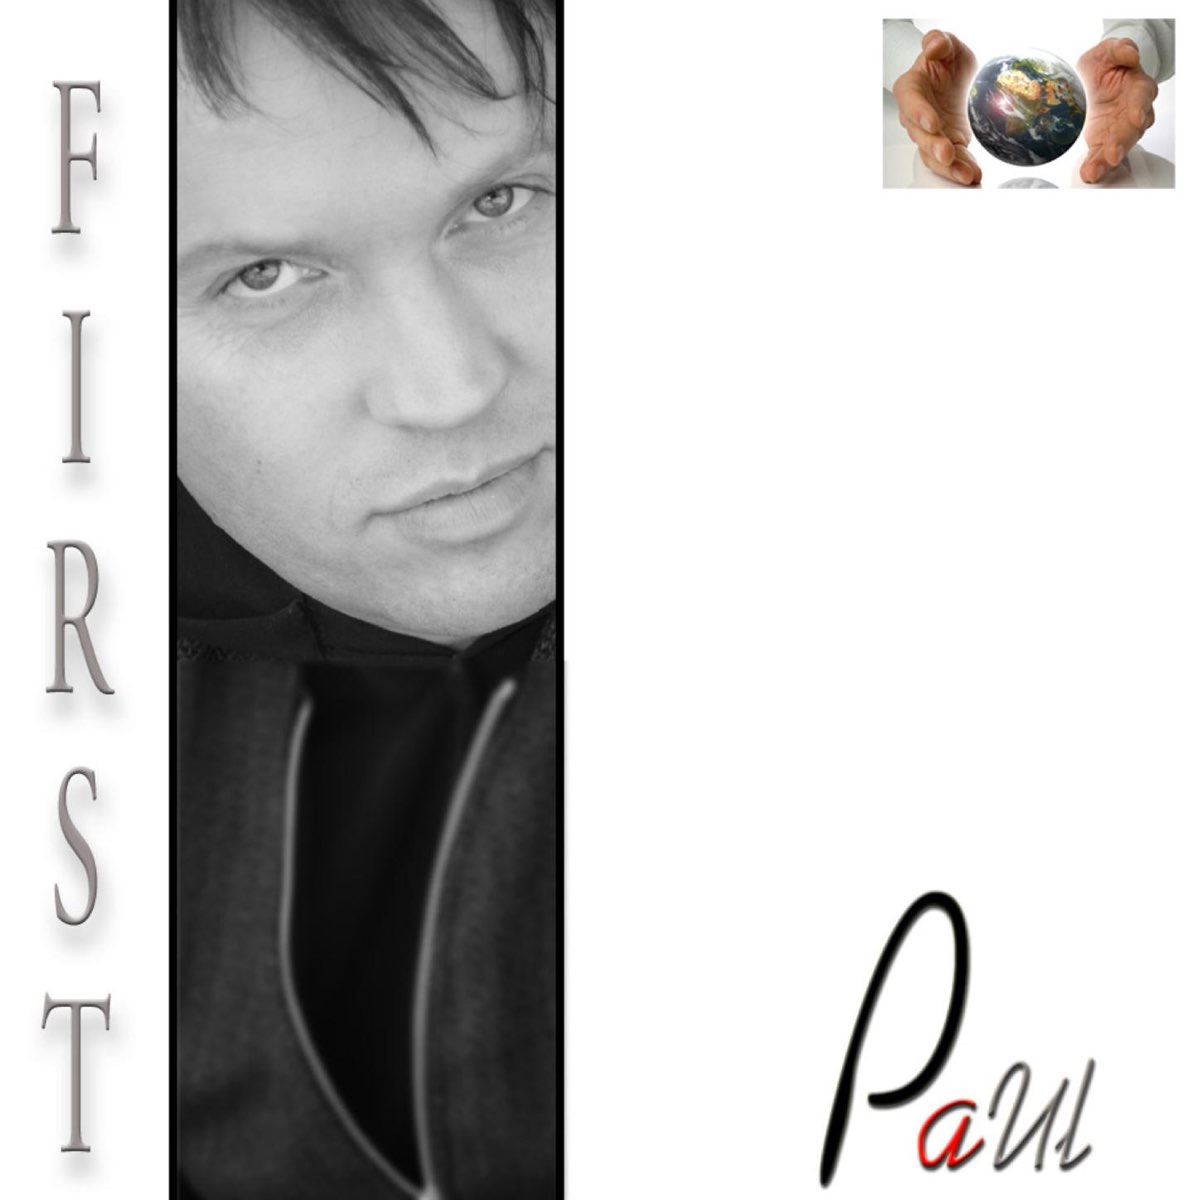 Paul first